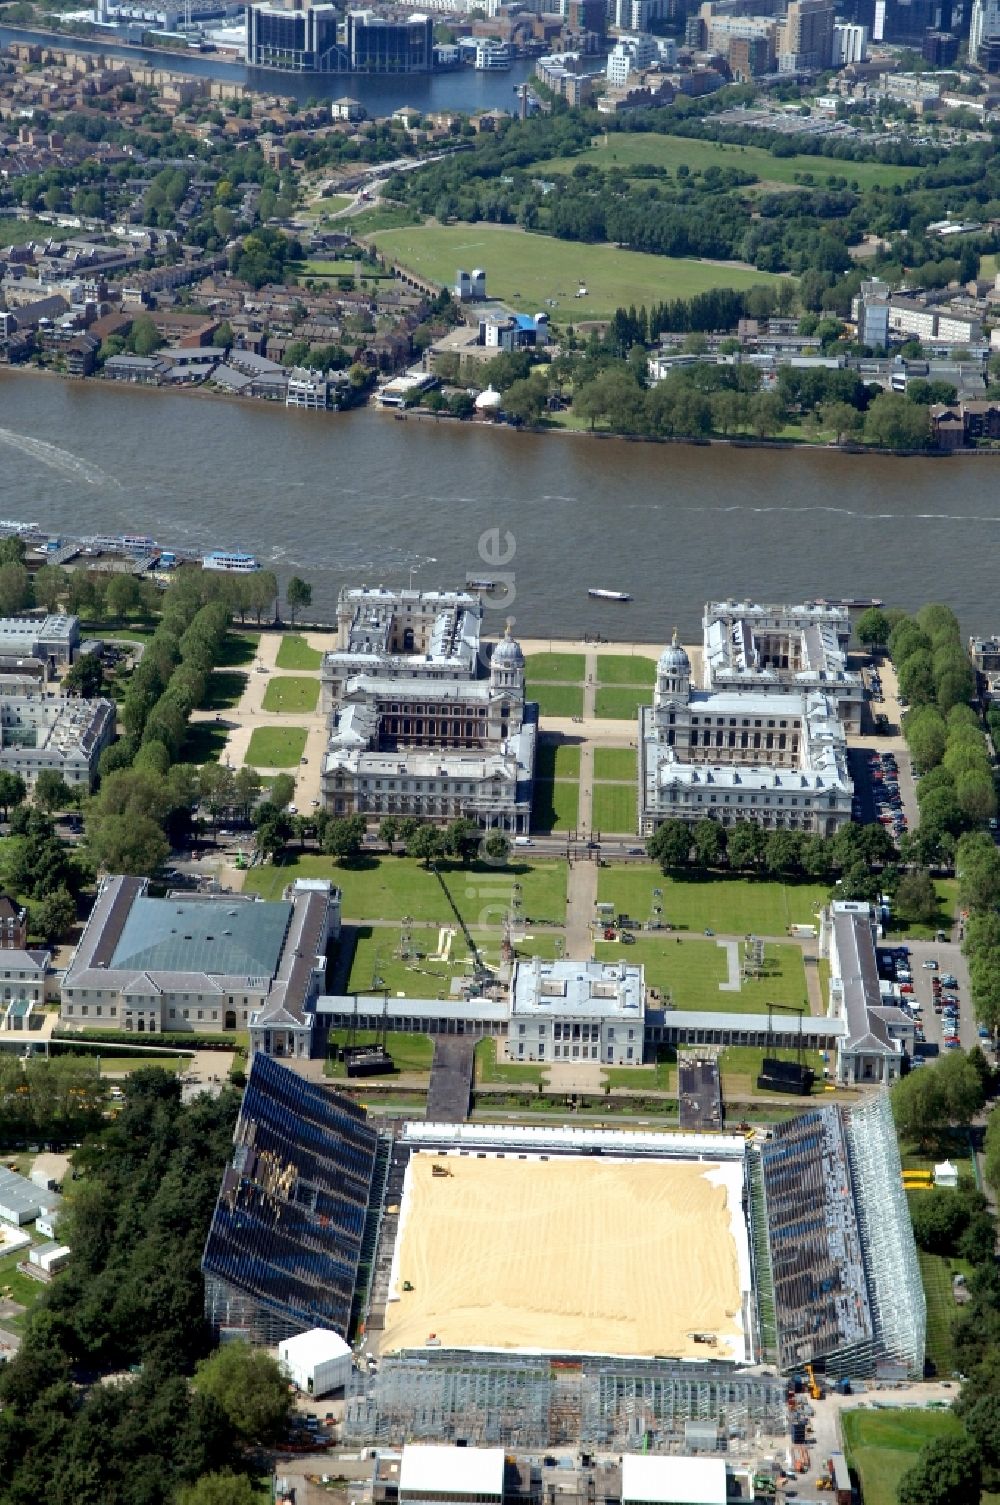 Luftbild London - London Olympia 2012 - Reitstadion Greenwich Park